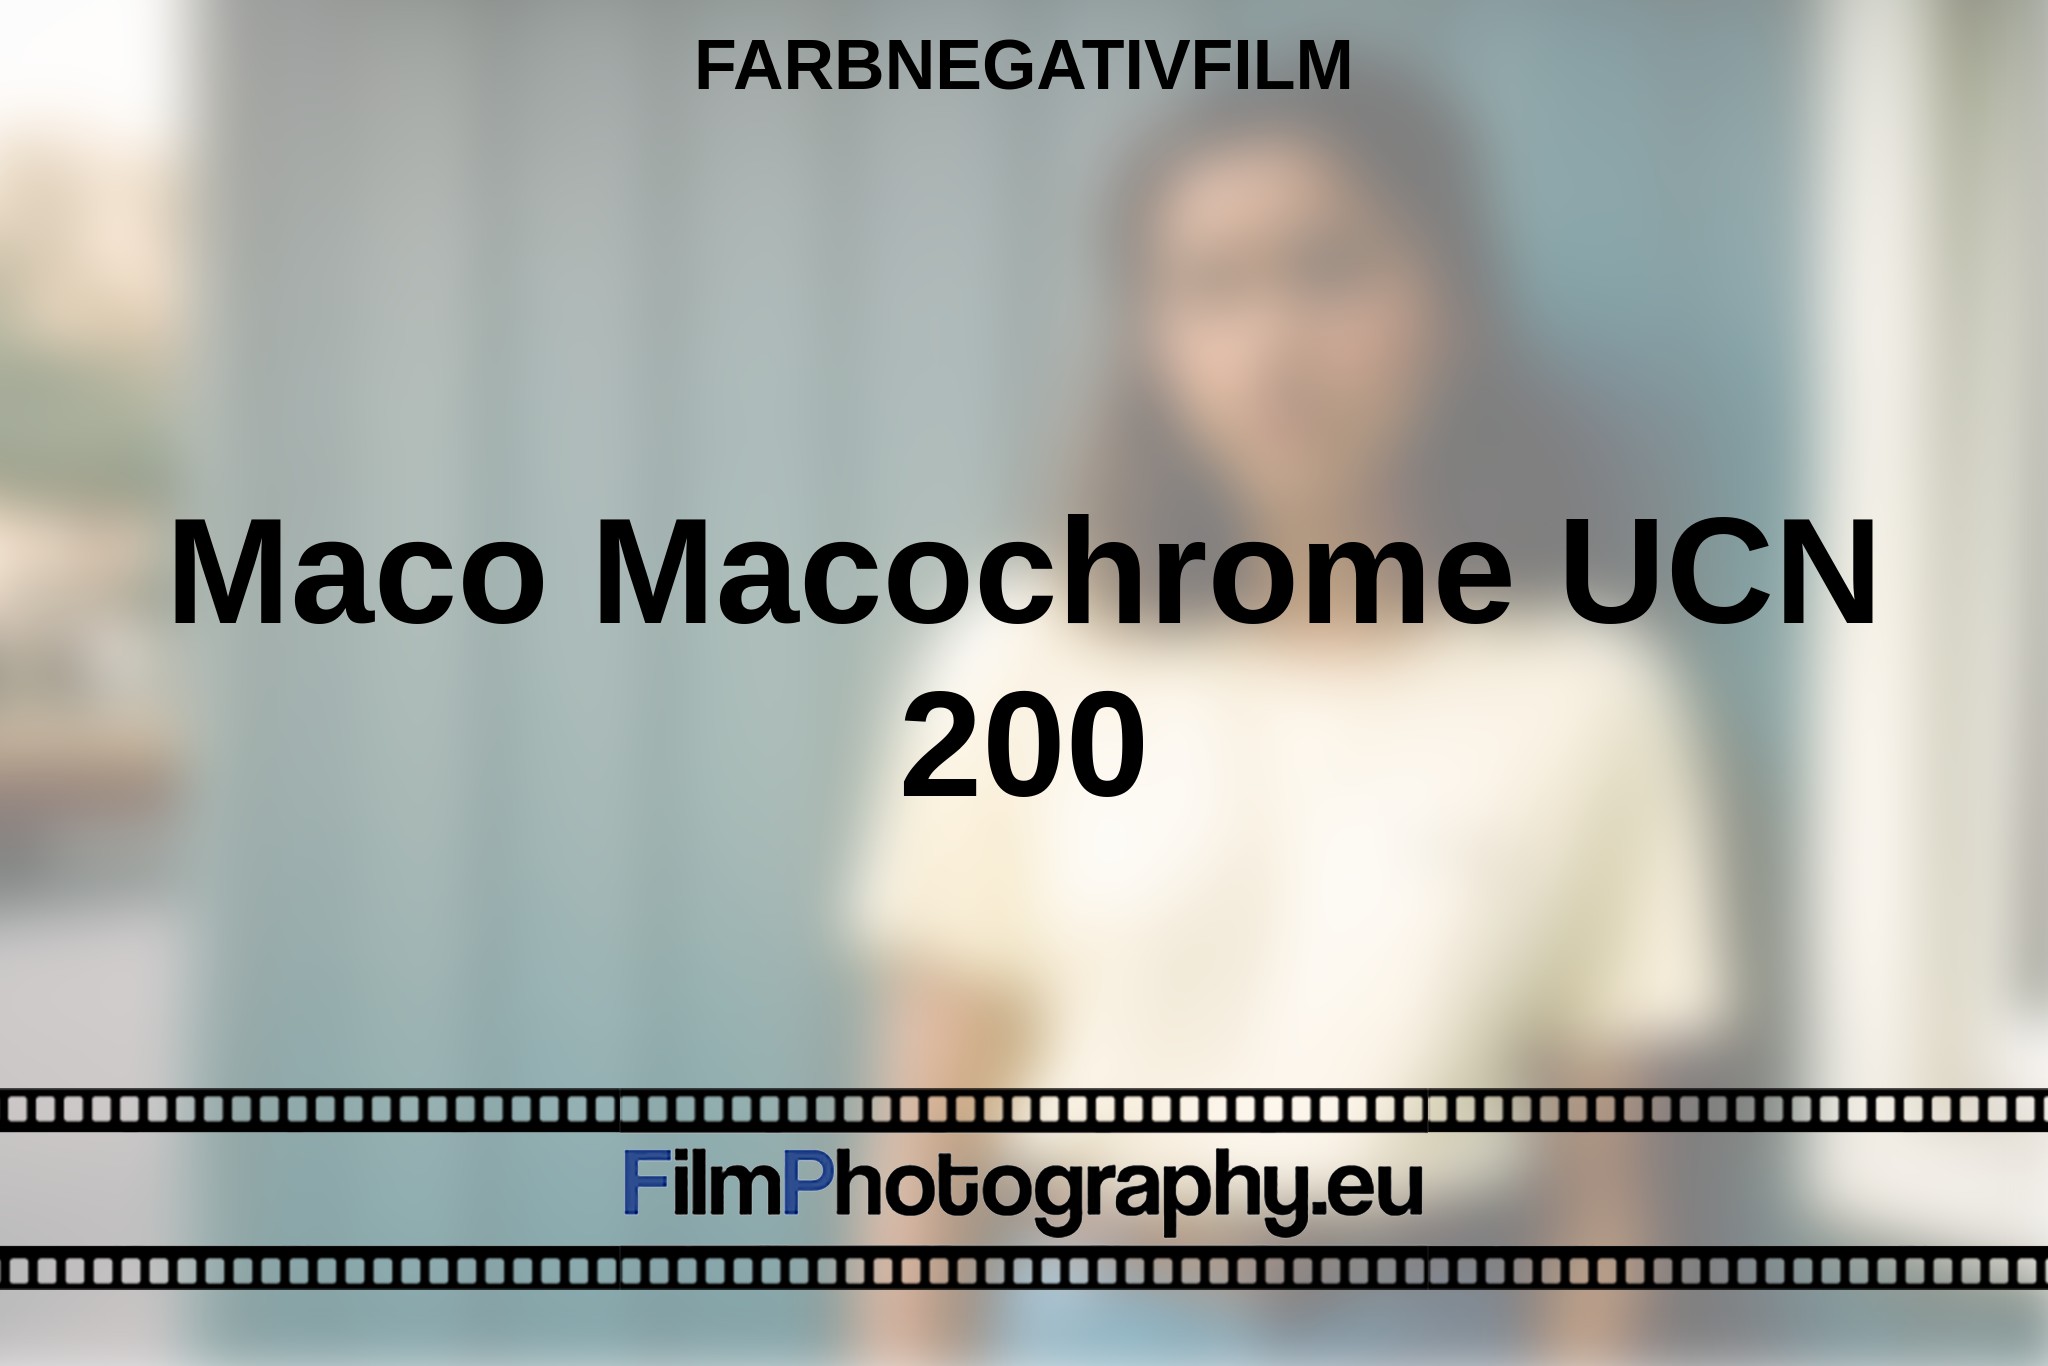 maco-macochrome-ucn-200-farbnegativfilm-bnv.jpg